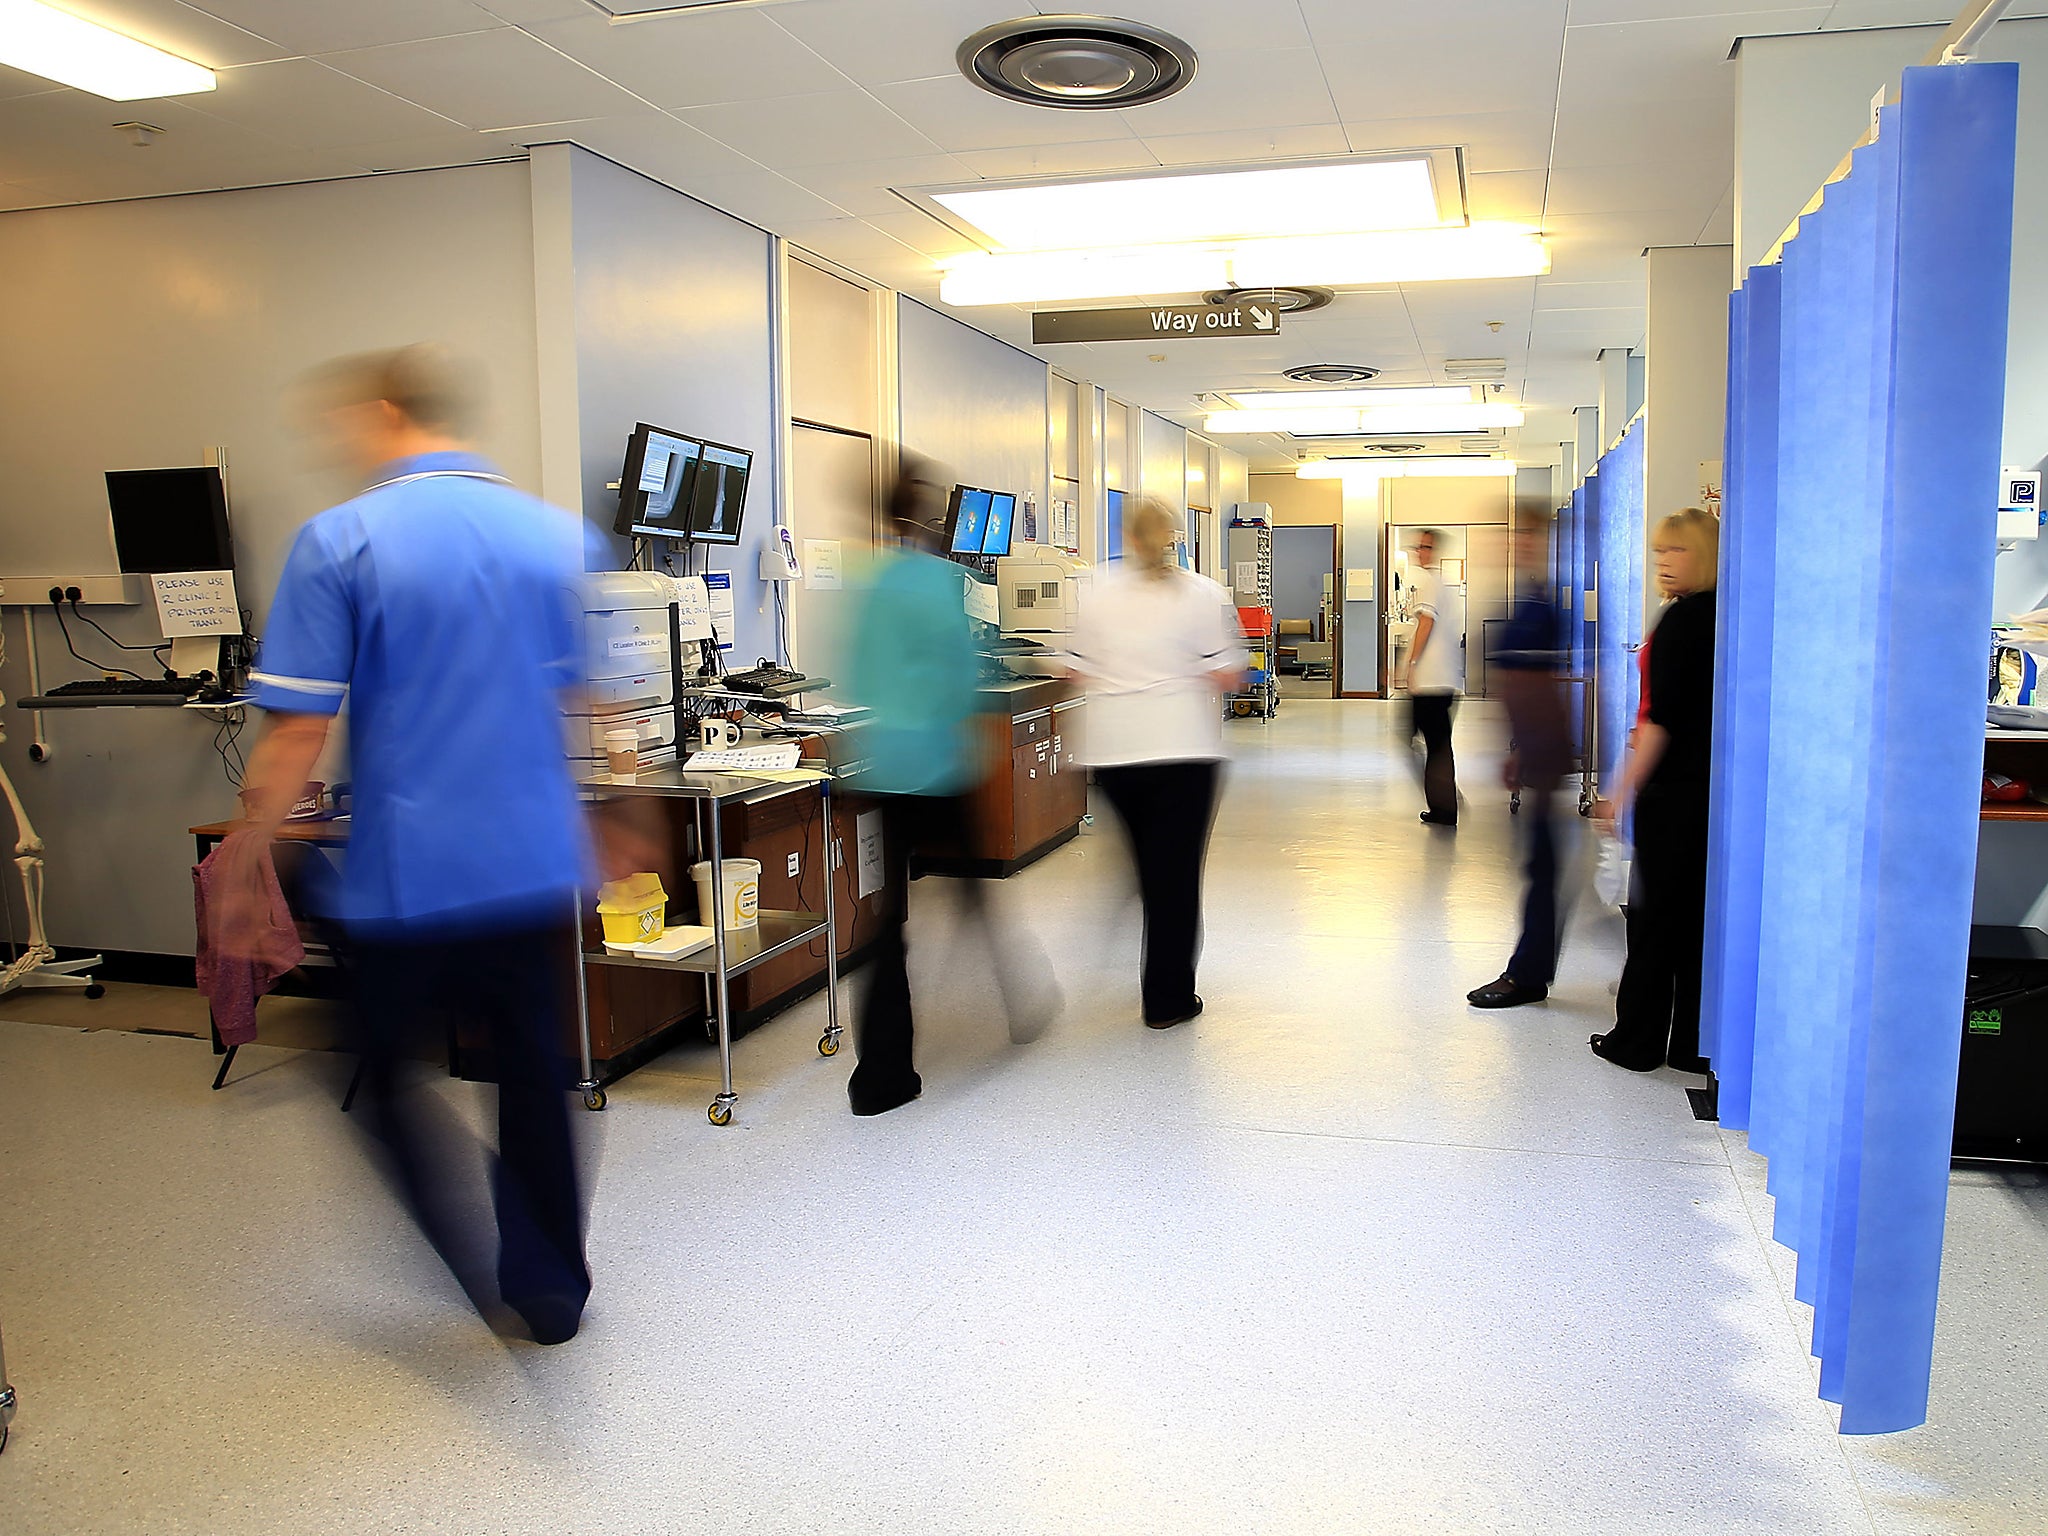 NHS hospital struggled to treat elderly cancer patient Michael Brennan